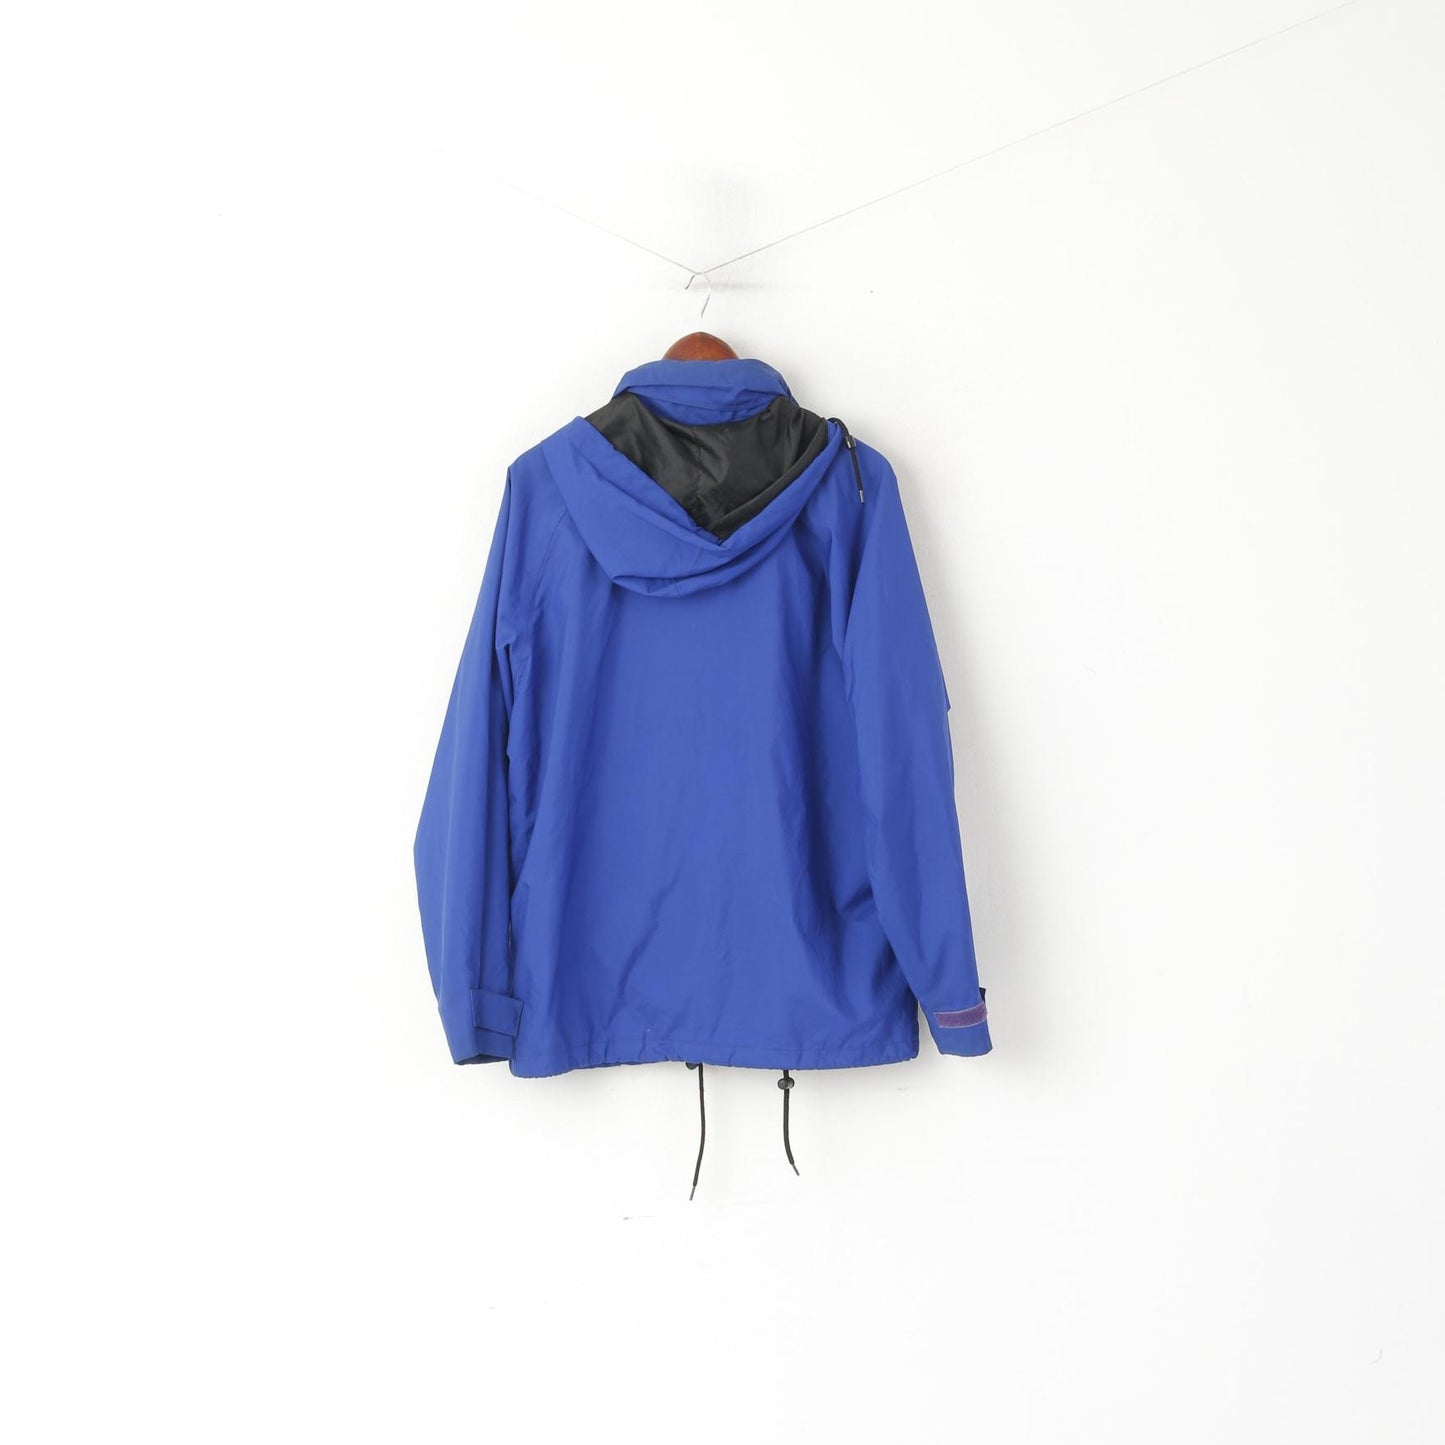 Tenson MPC Women 40 L Jacket Blue Lightweight Breathable Outdoor Hood Top